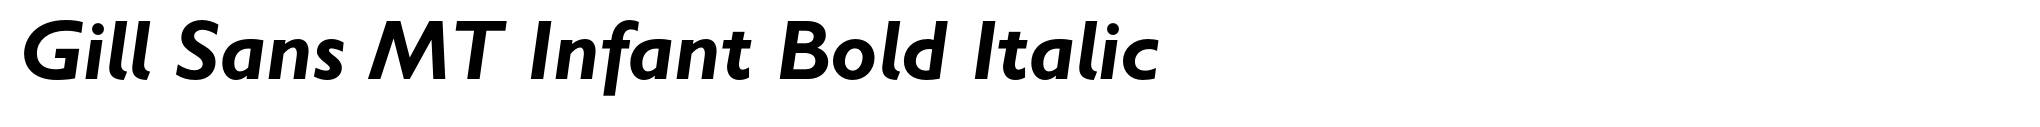 Gill Sans MT Infant Bold Italic image